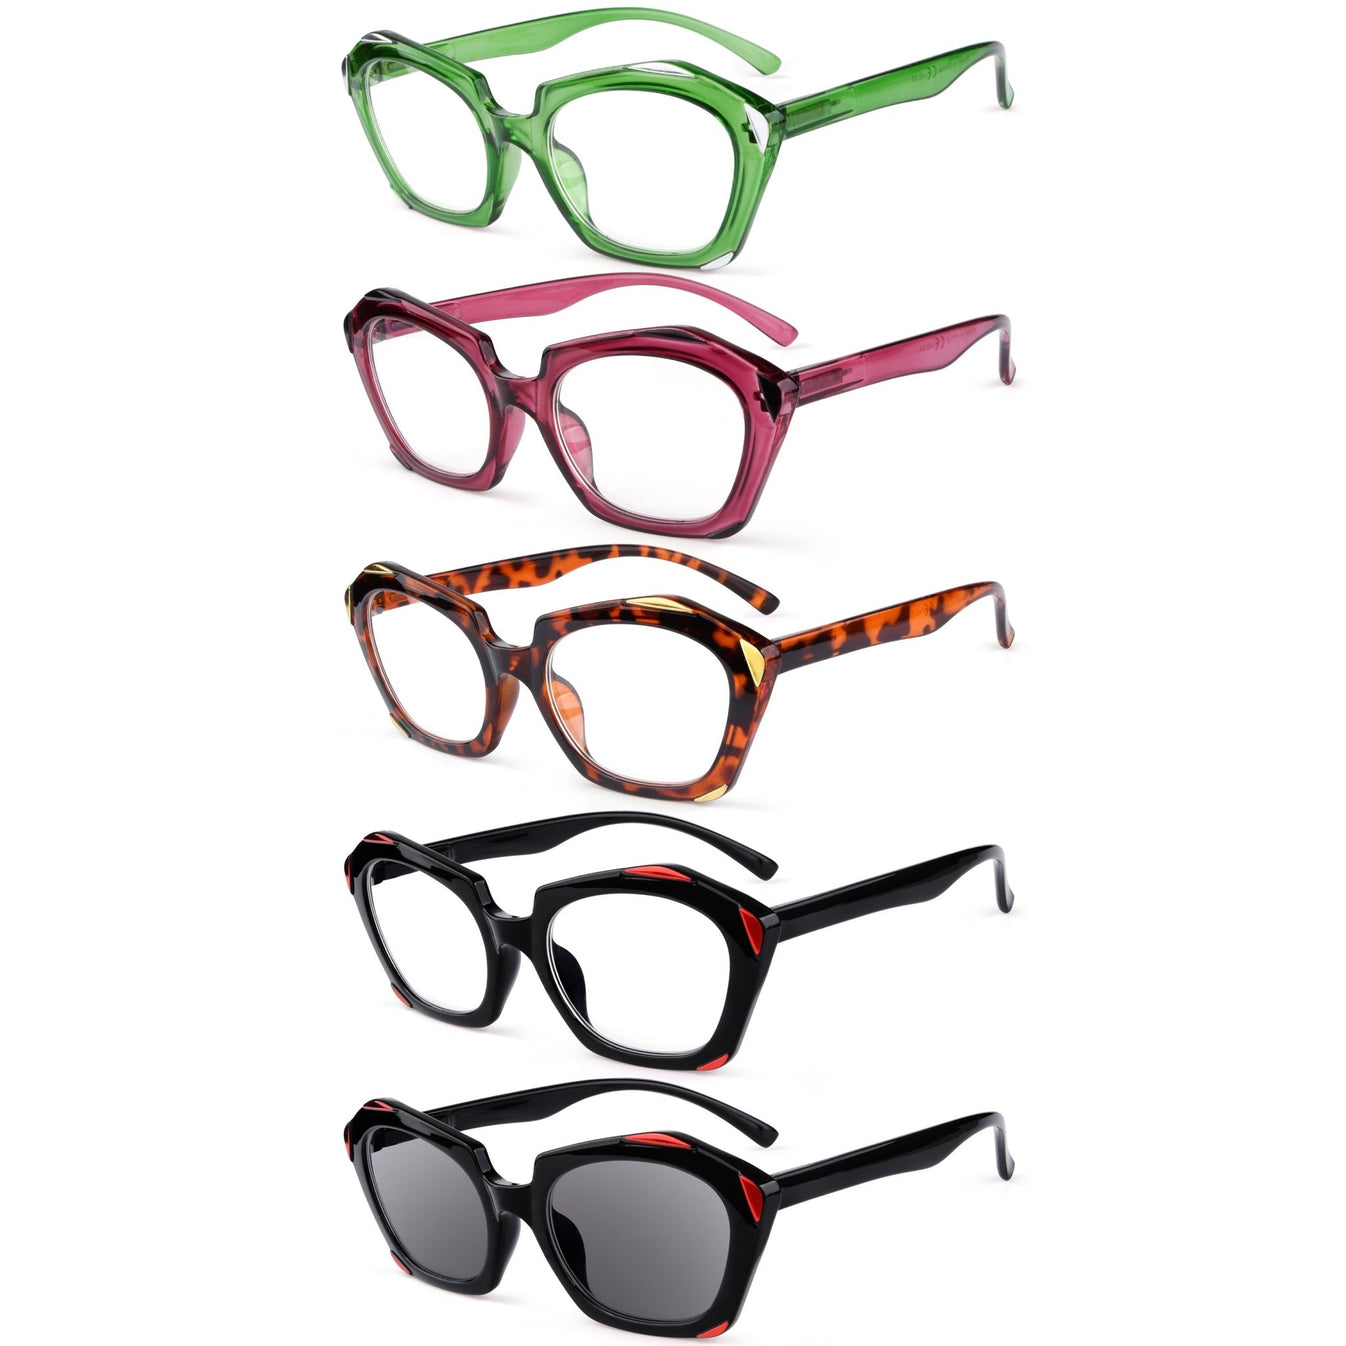 Reading Glasses Fashionable Eyeglasses Women R2129 5pack